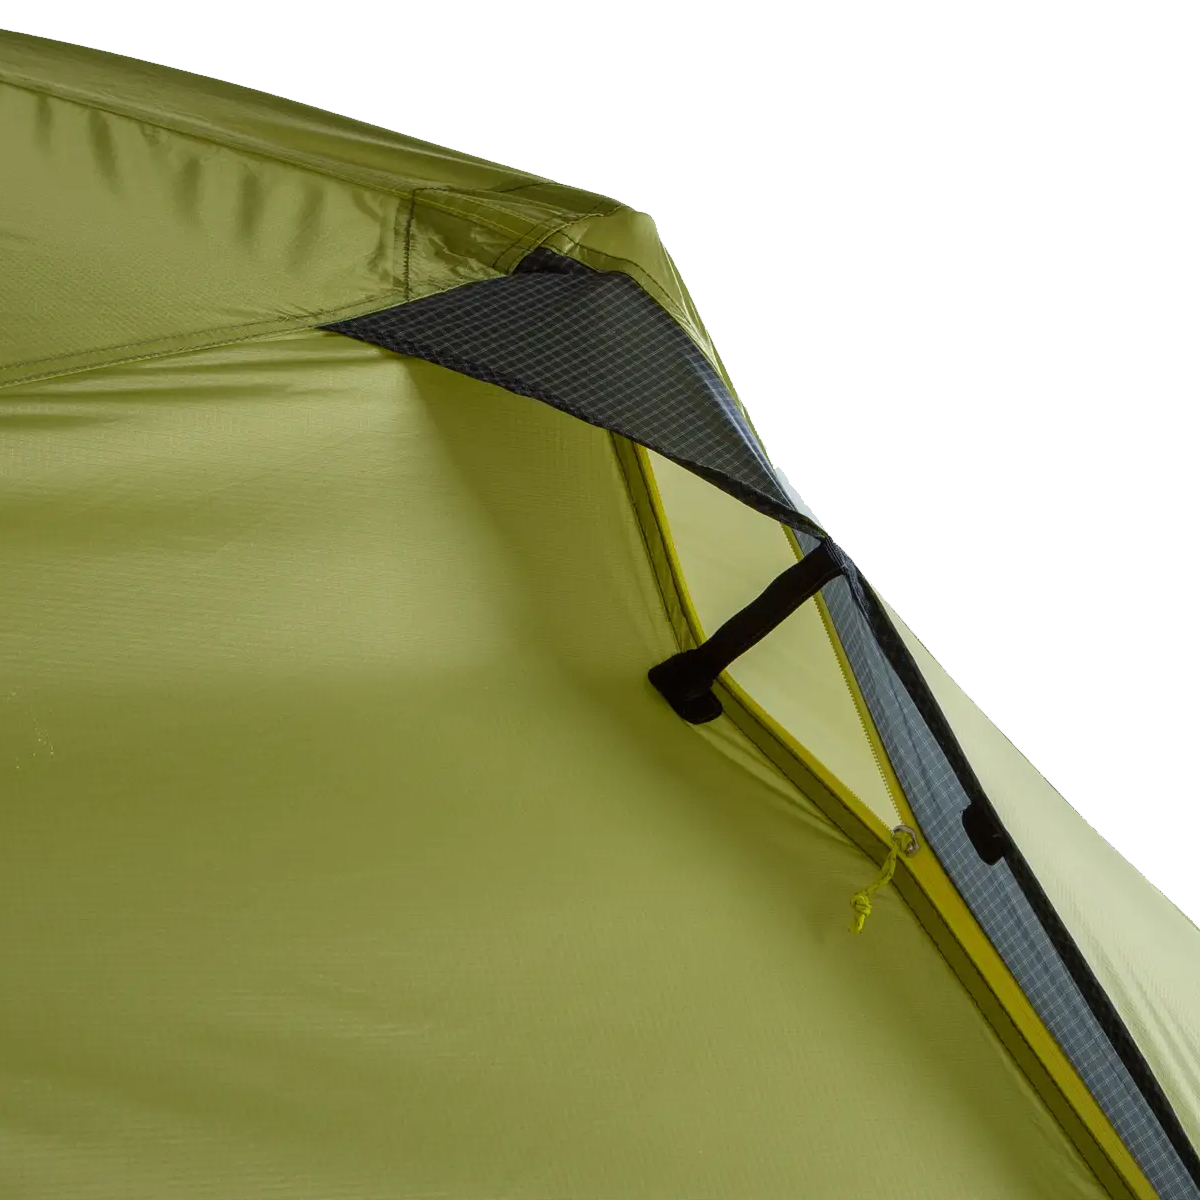 Hornet OSMO Ultralight 1 Person Tent alternate view